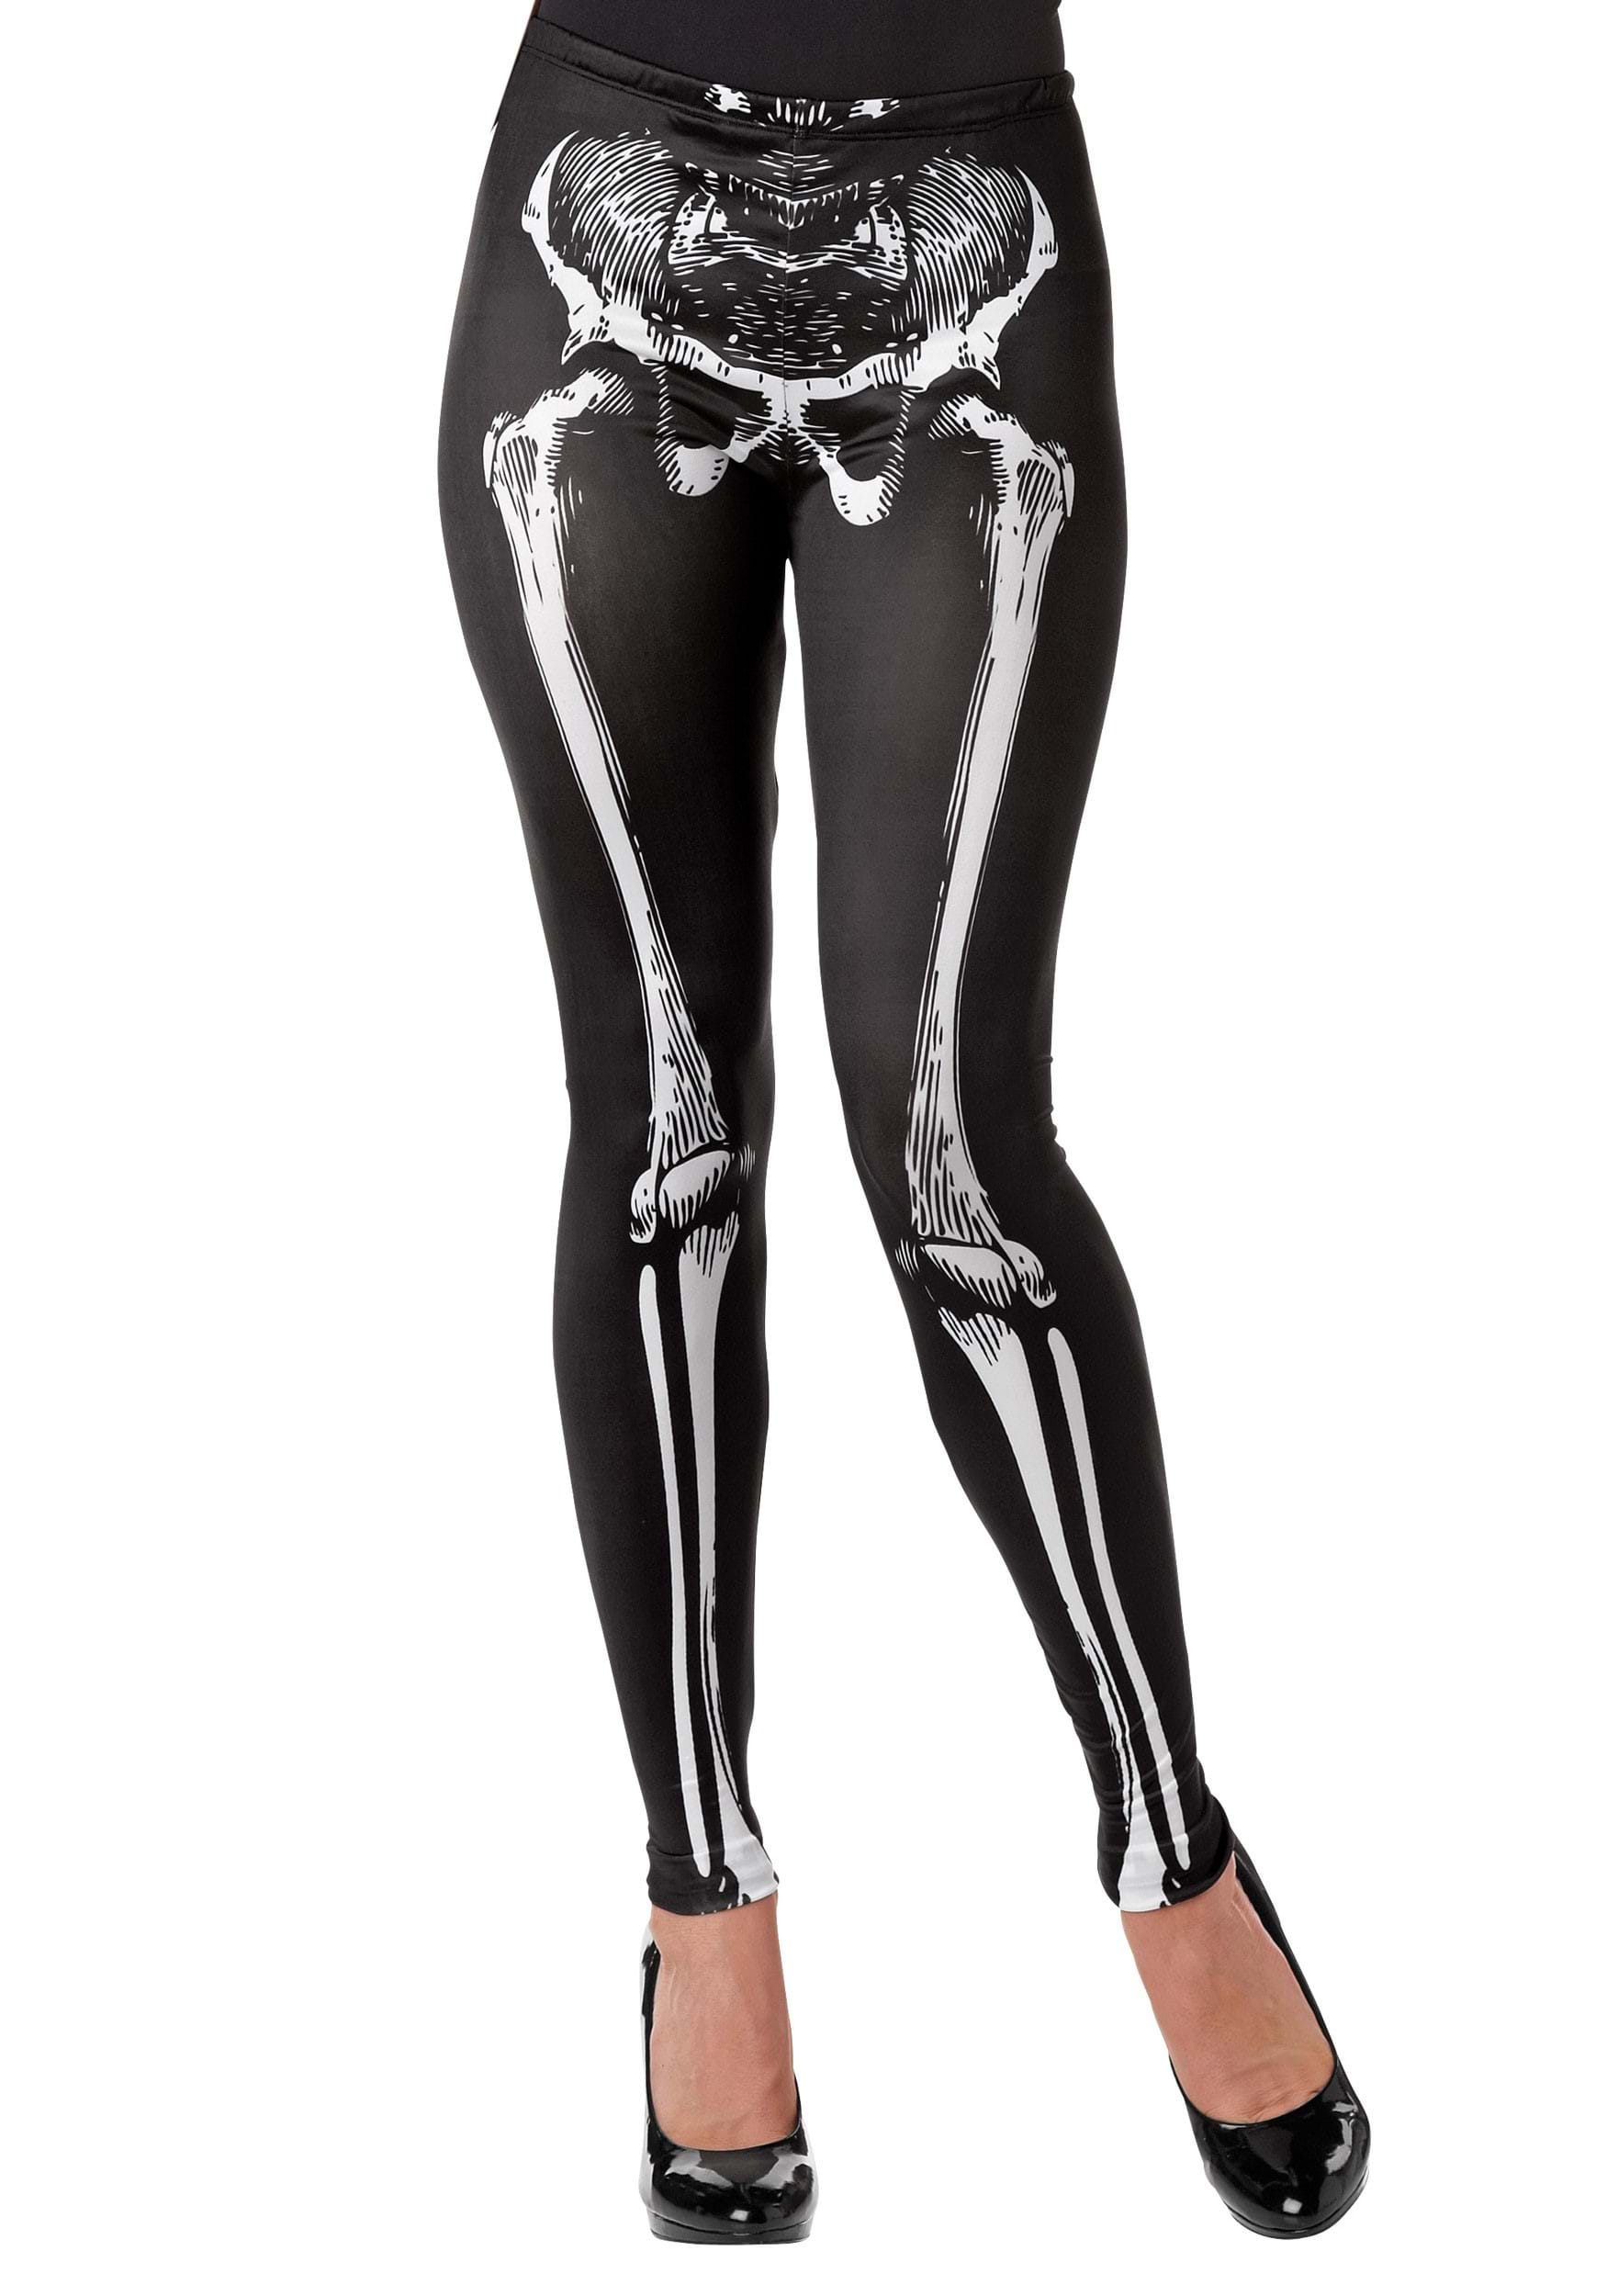 https://images.halloweencostumes.ca/products/79811/1-1/womens-black-skeleton-leggings.jpg